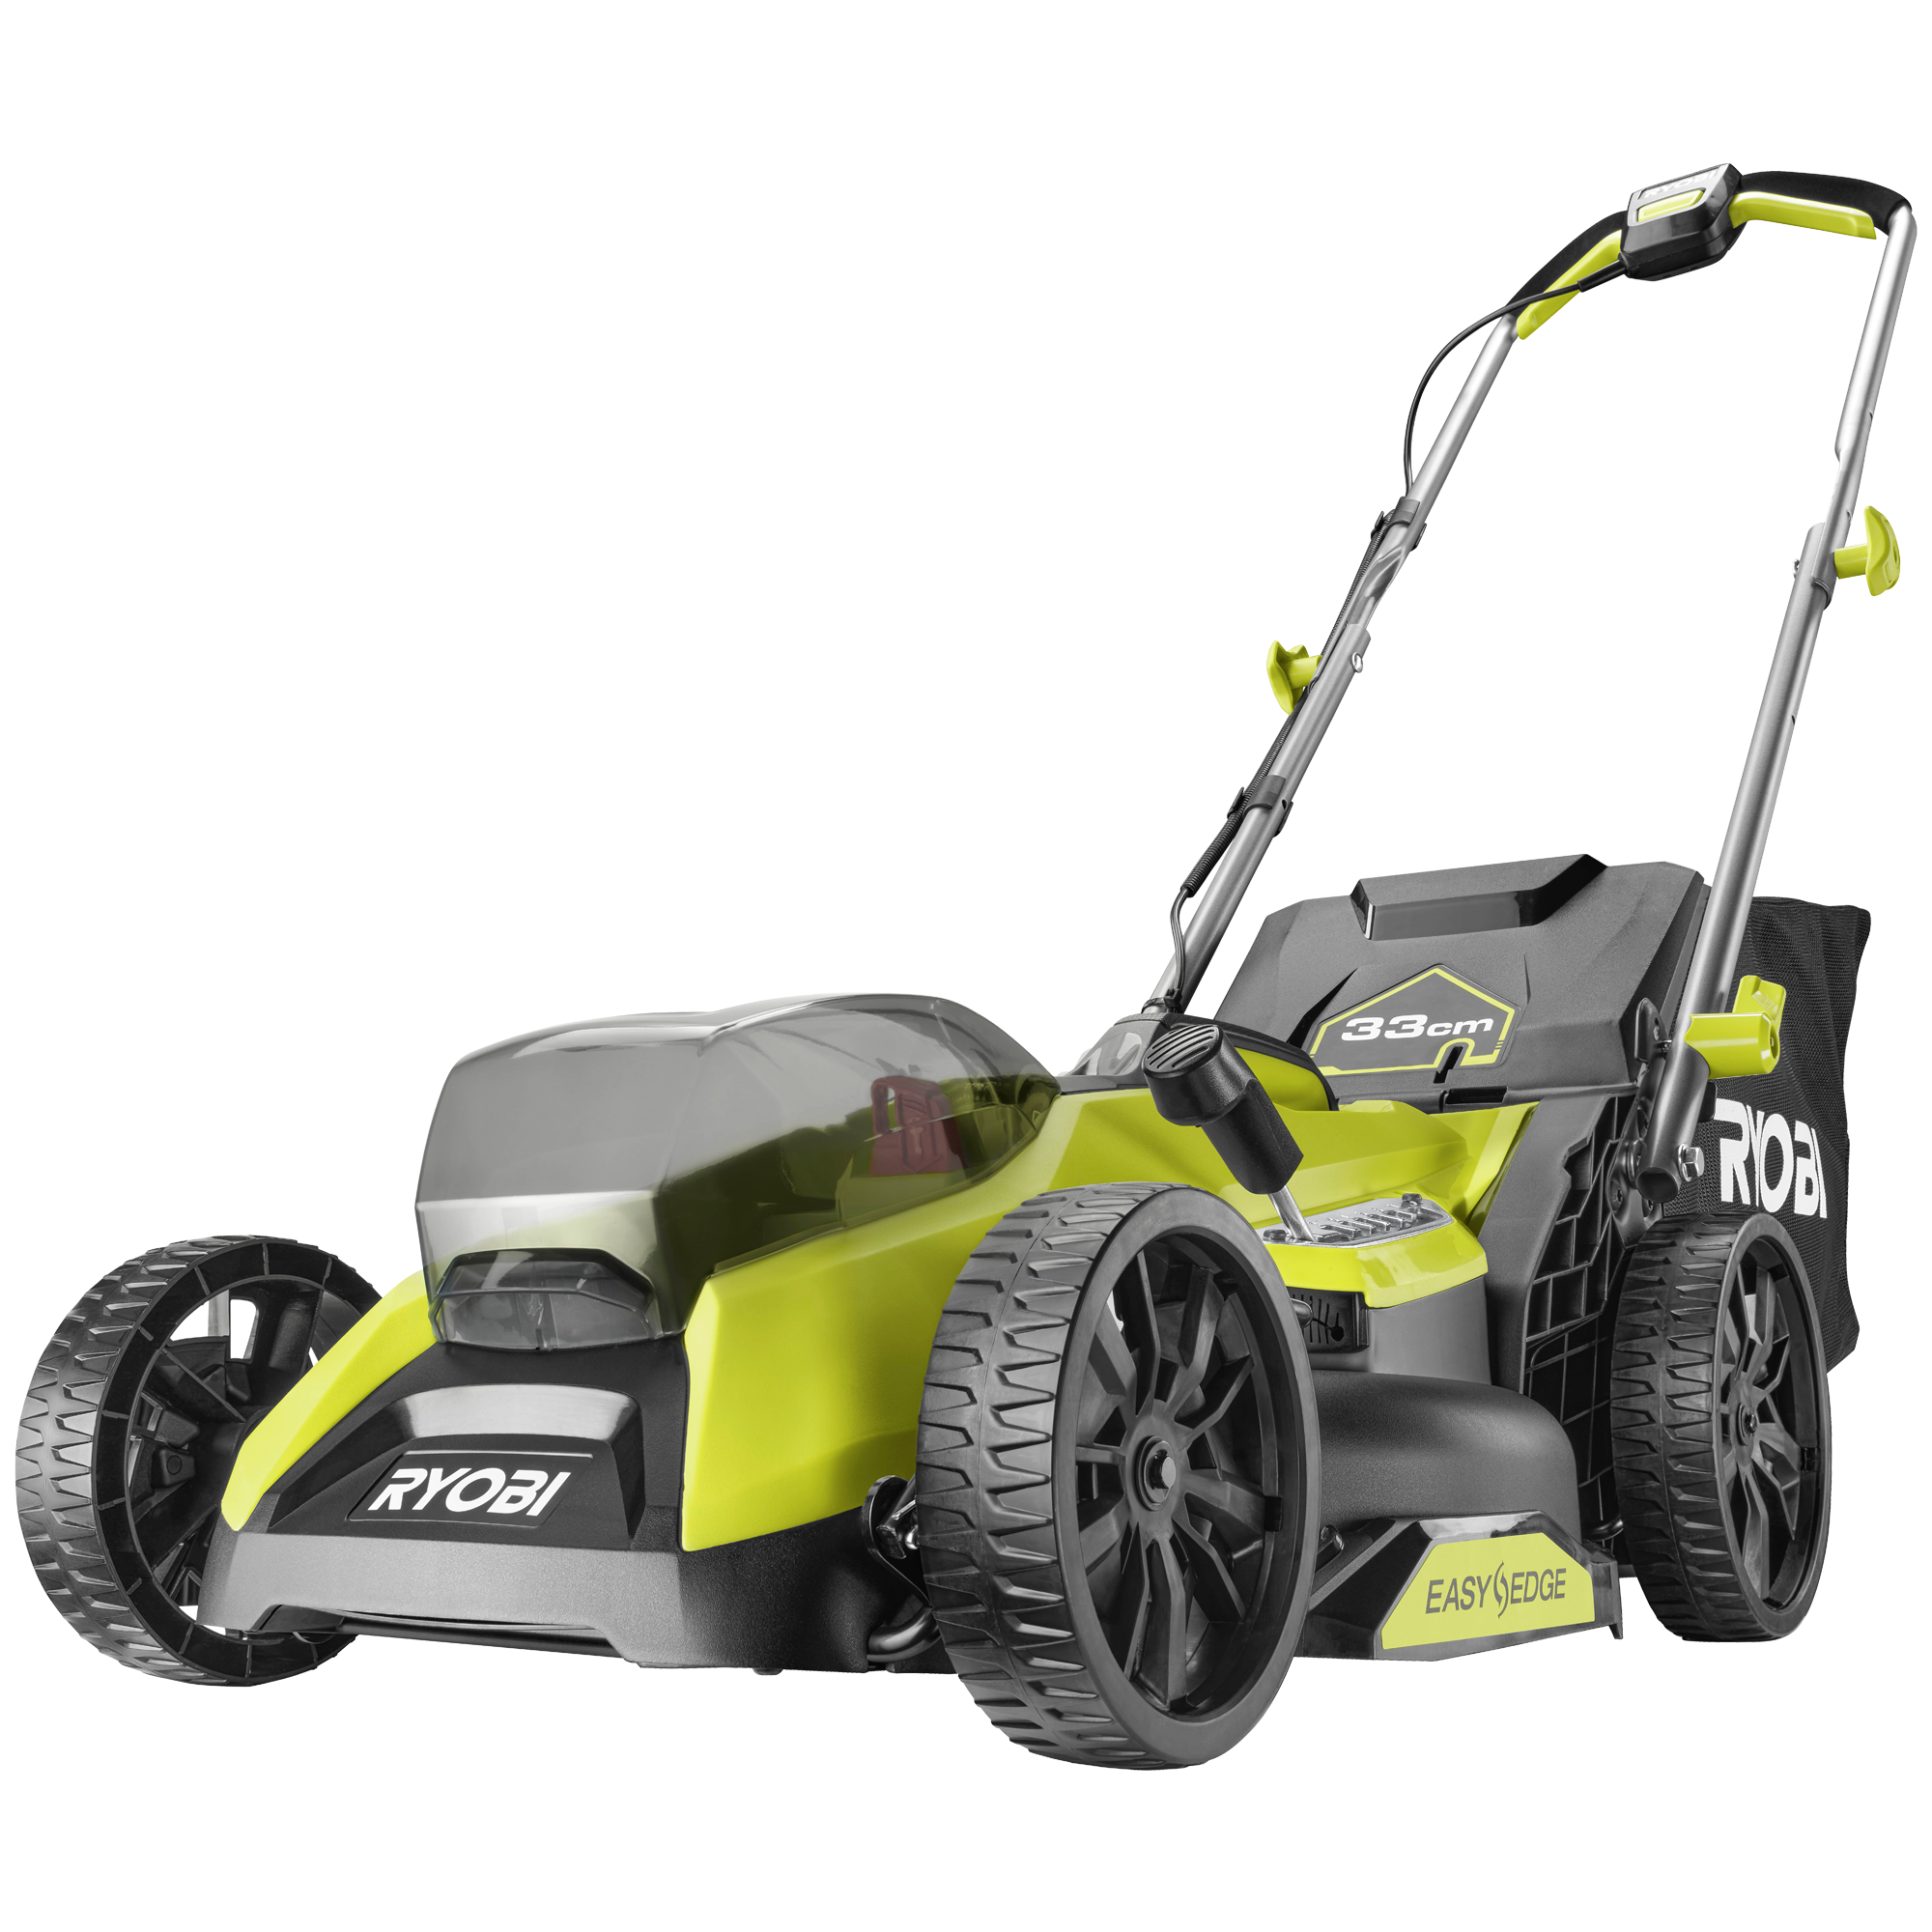 18V ONE+ Brushless 33cm (13”) Lawn Mower – Tool Only